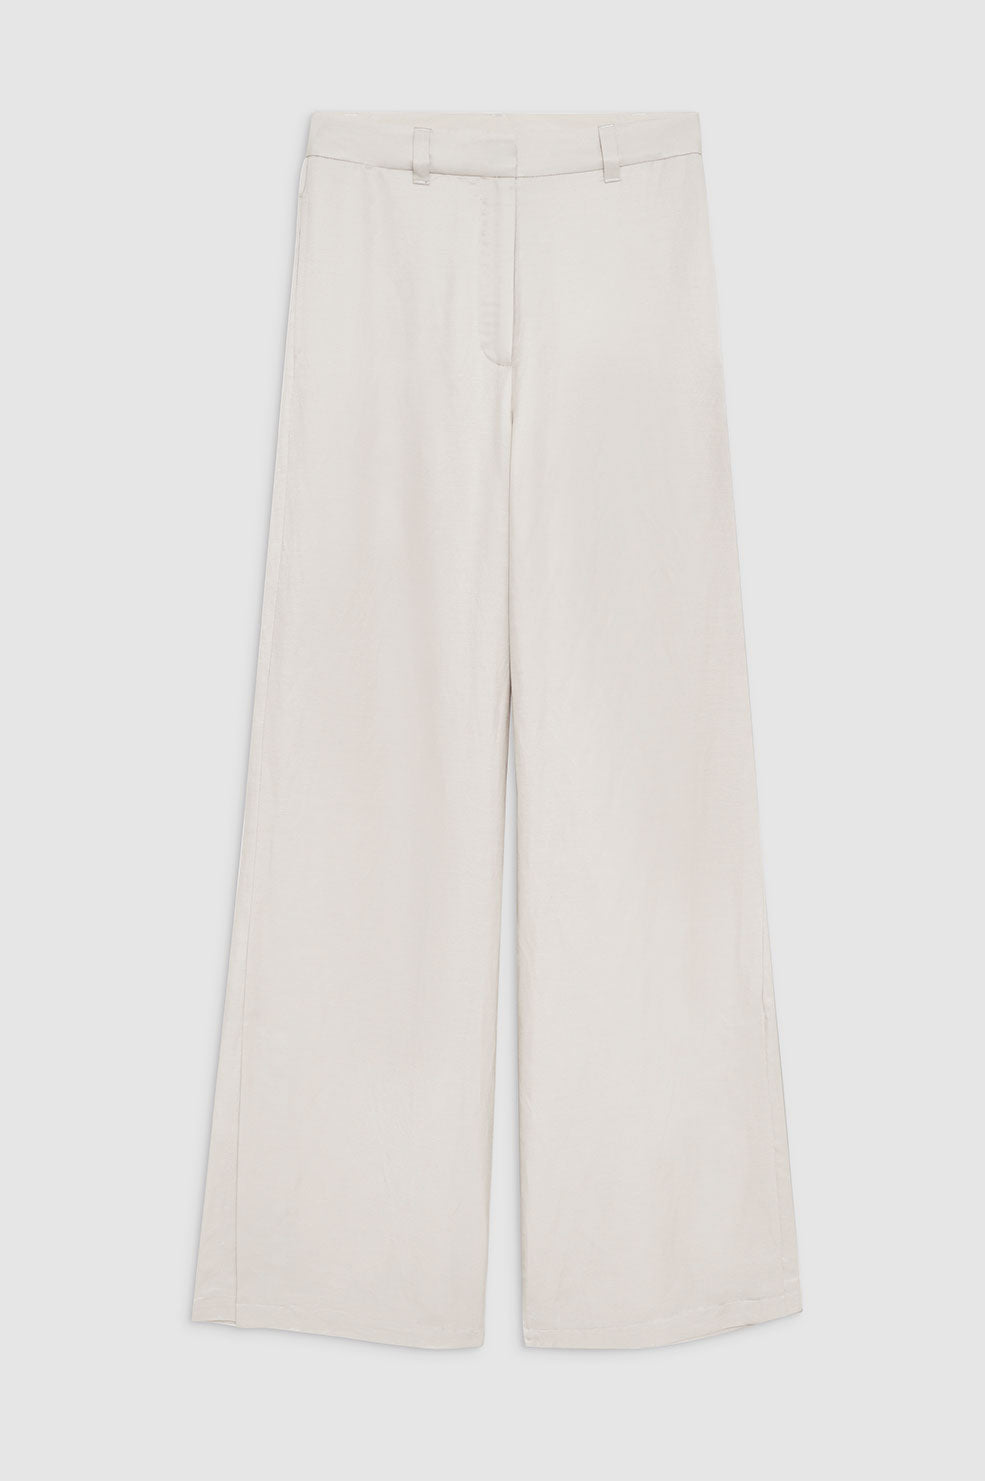 ANINE BING Lyra Trouser - Dove Linen Blend - Front View